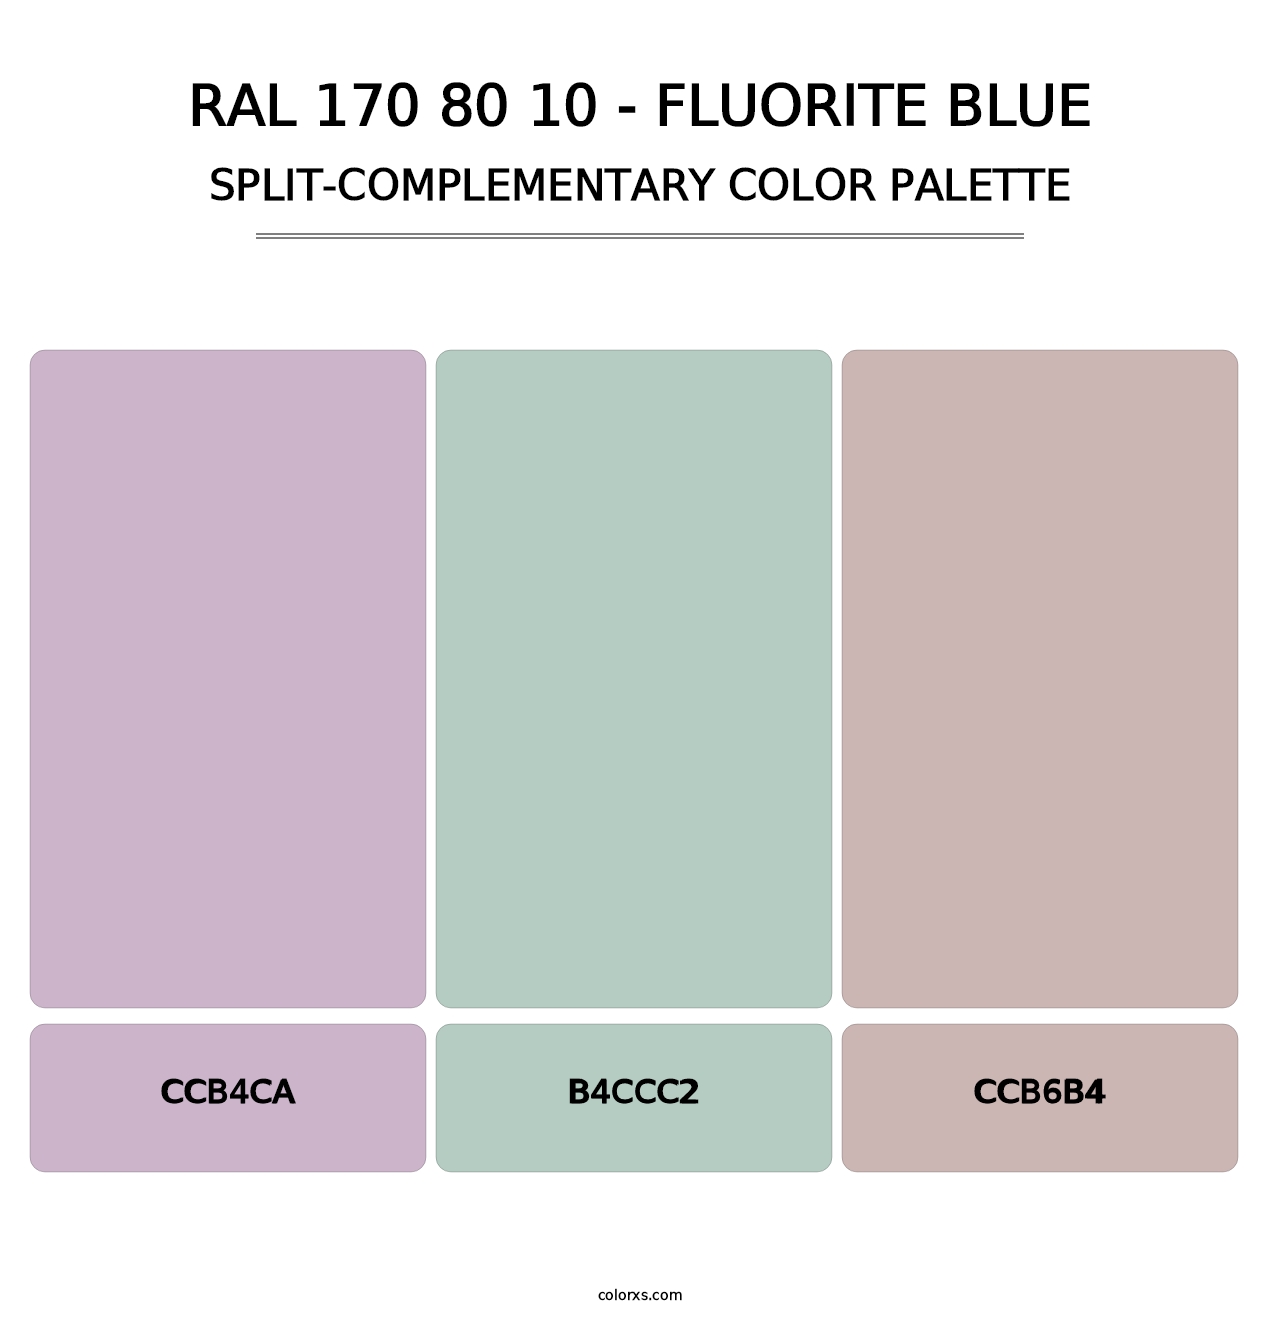 RAL 170 80 10 - Fluorite Blue - Split-Complementary Color Palette